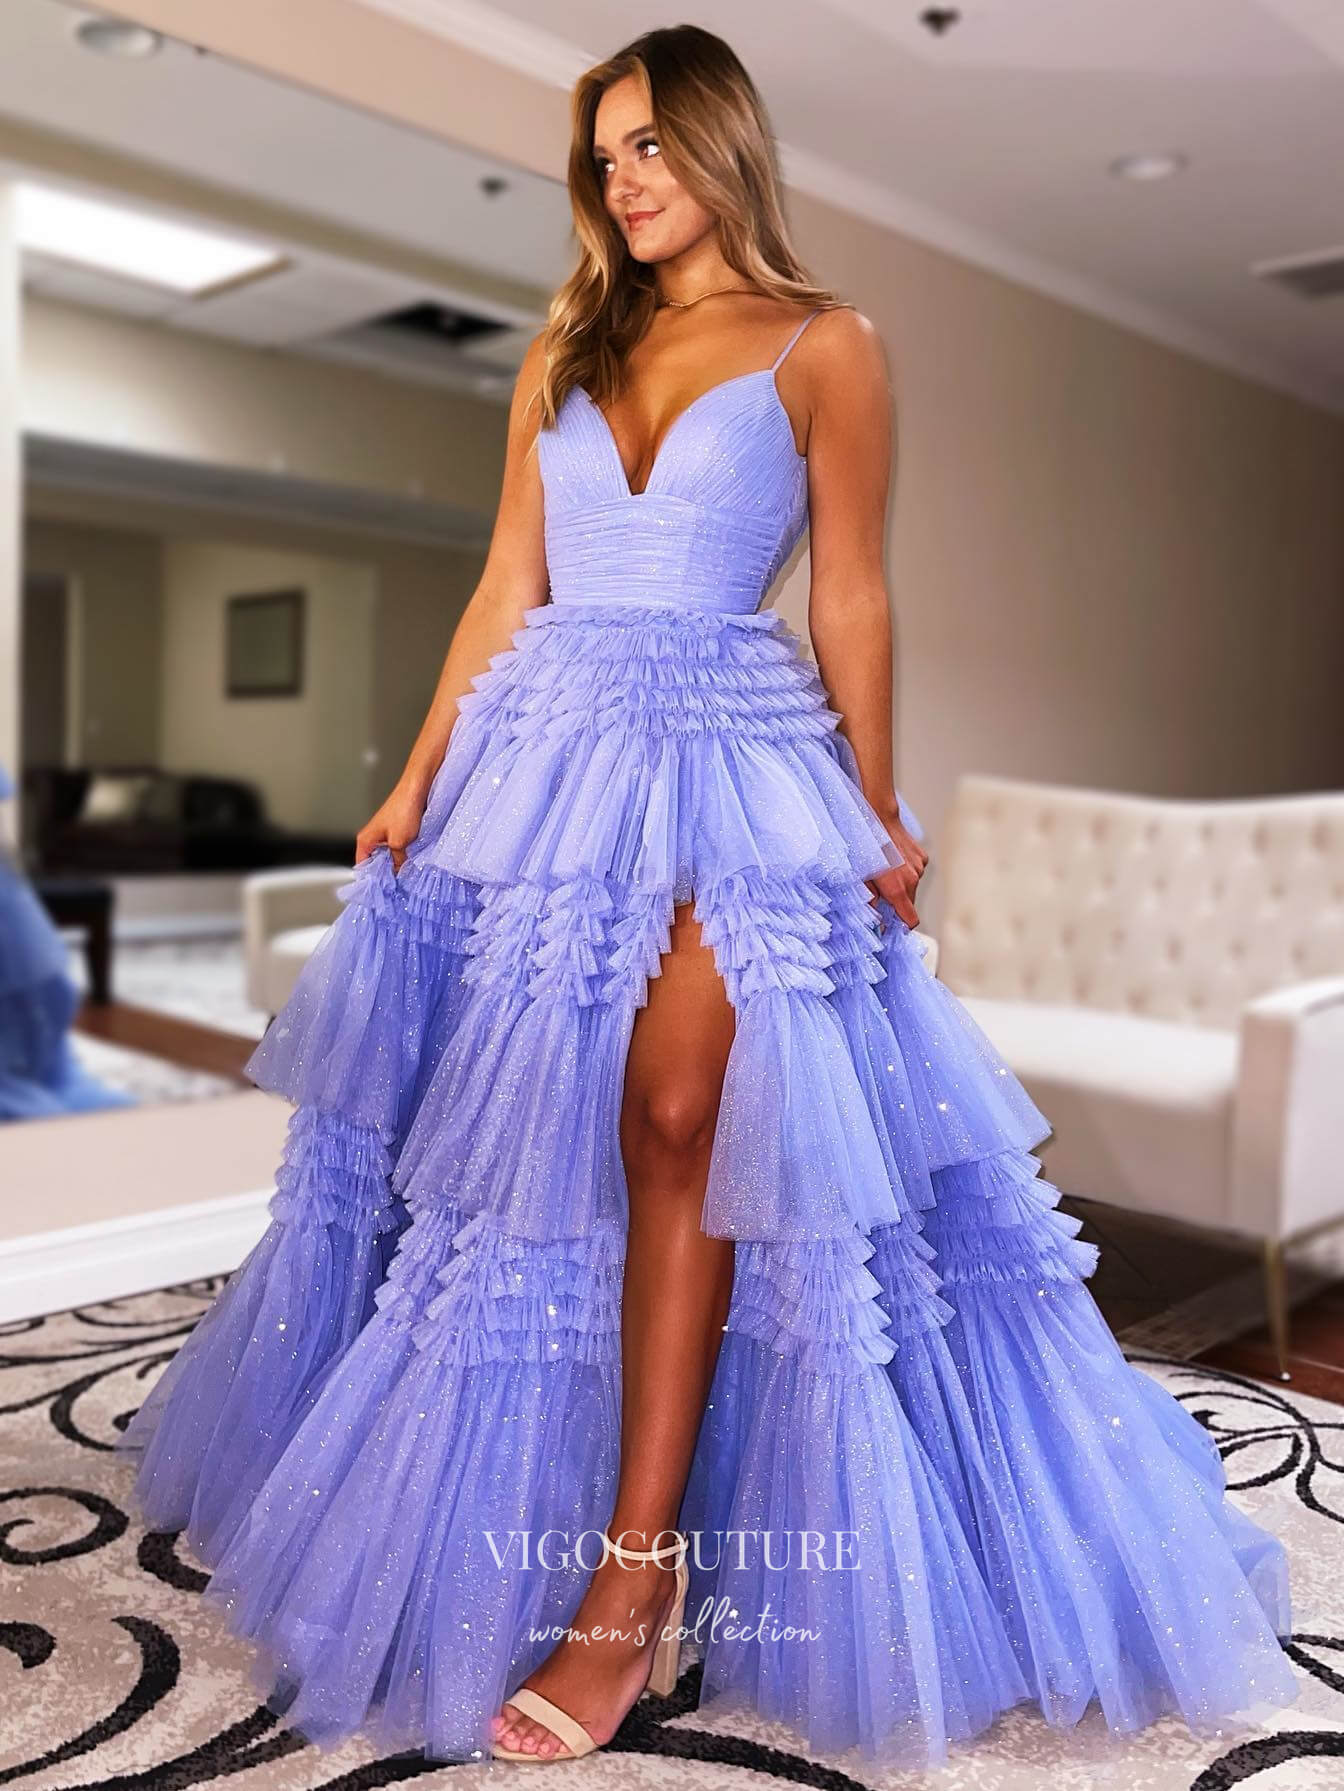 vigocouture-Sparkly Tulle Tiered Prom Dresses A-Line Spaghetti Strap Formal Dresses 21544-Prom Dresses-vigocouture-